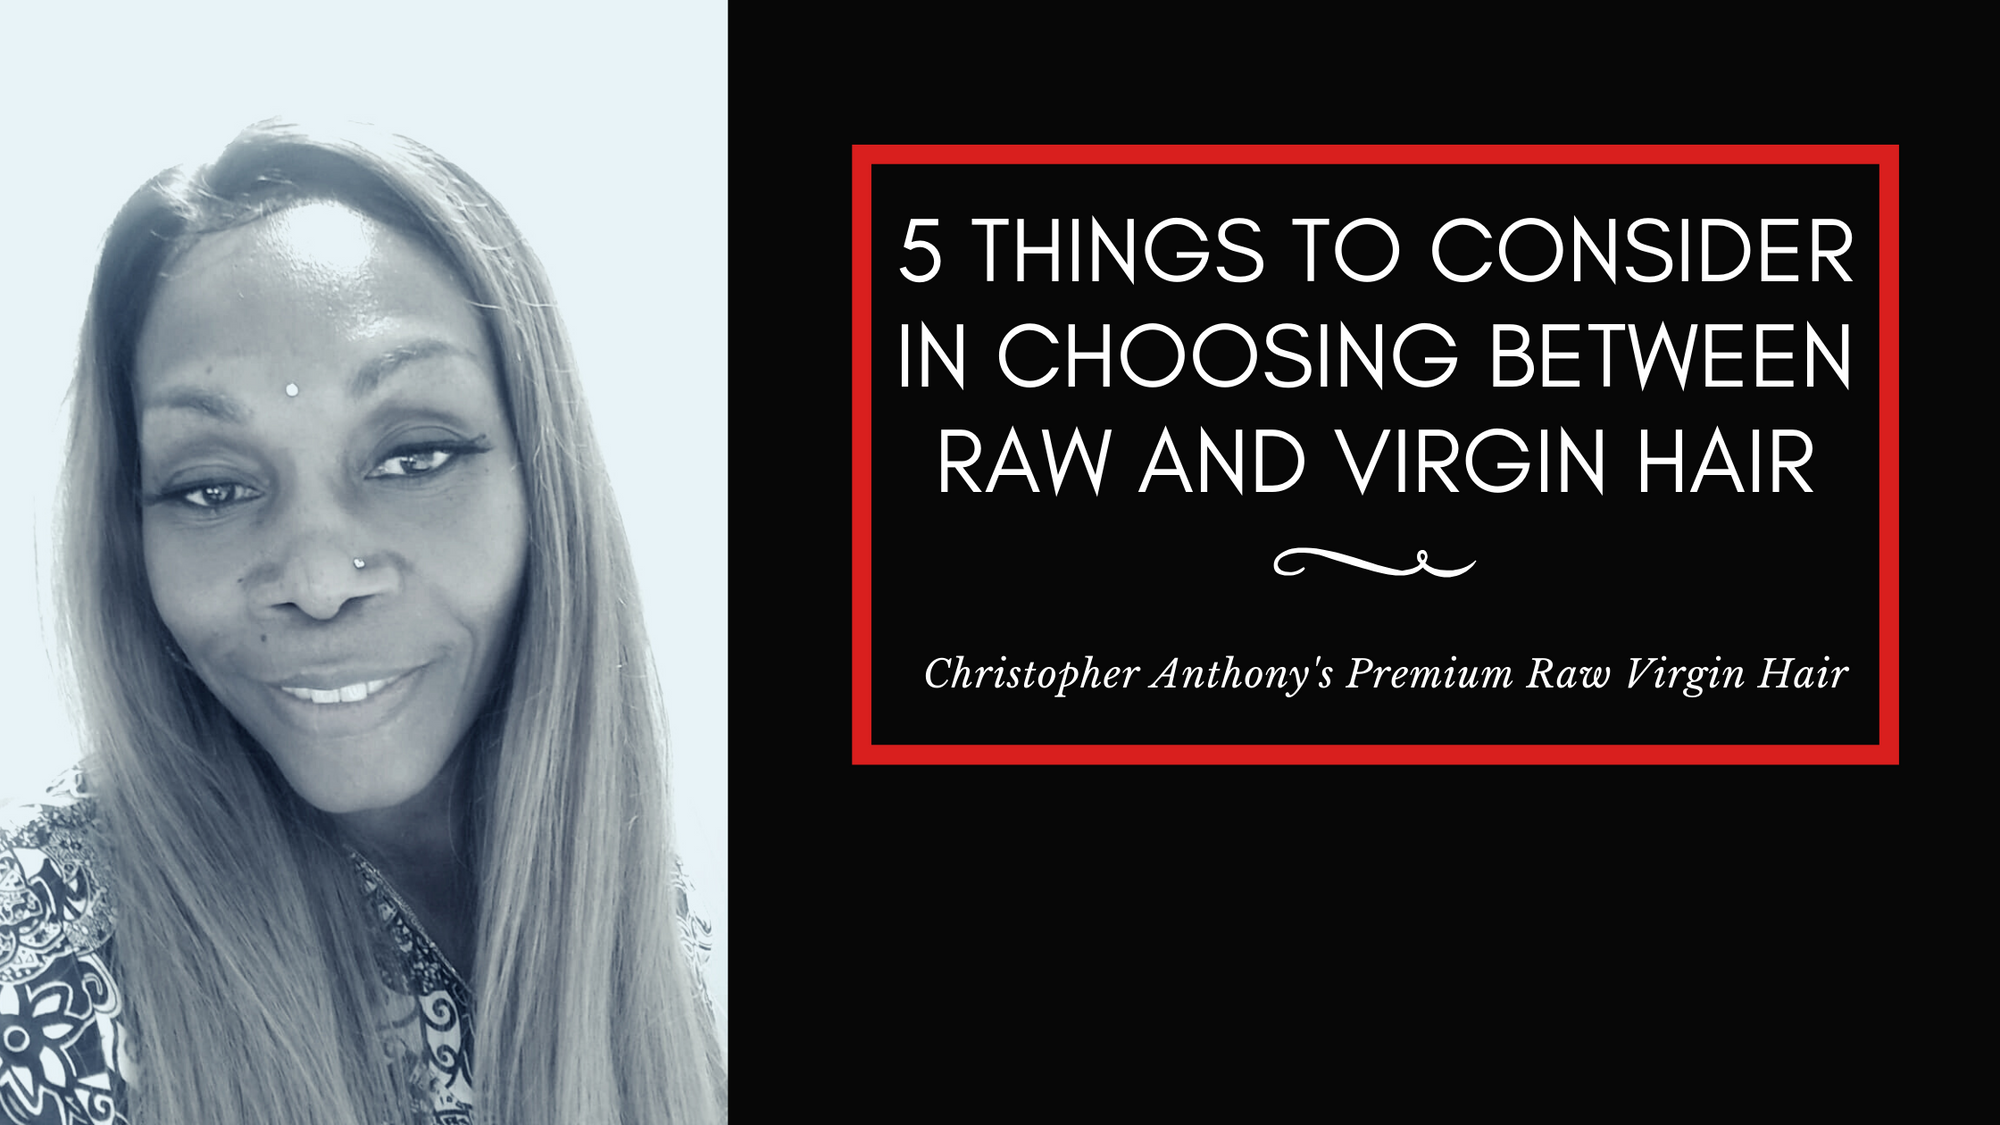 5 Things to Consider When Choosing Between Raw and Virgin Hair